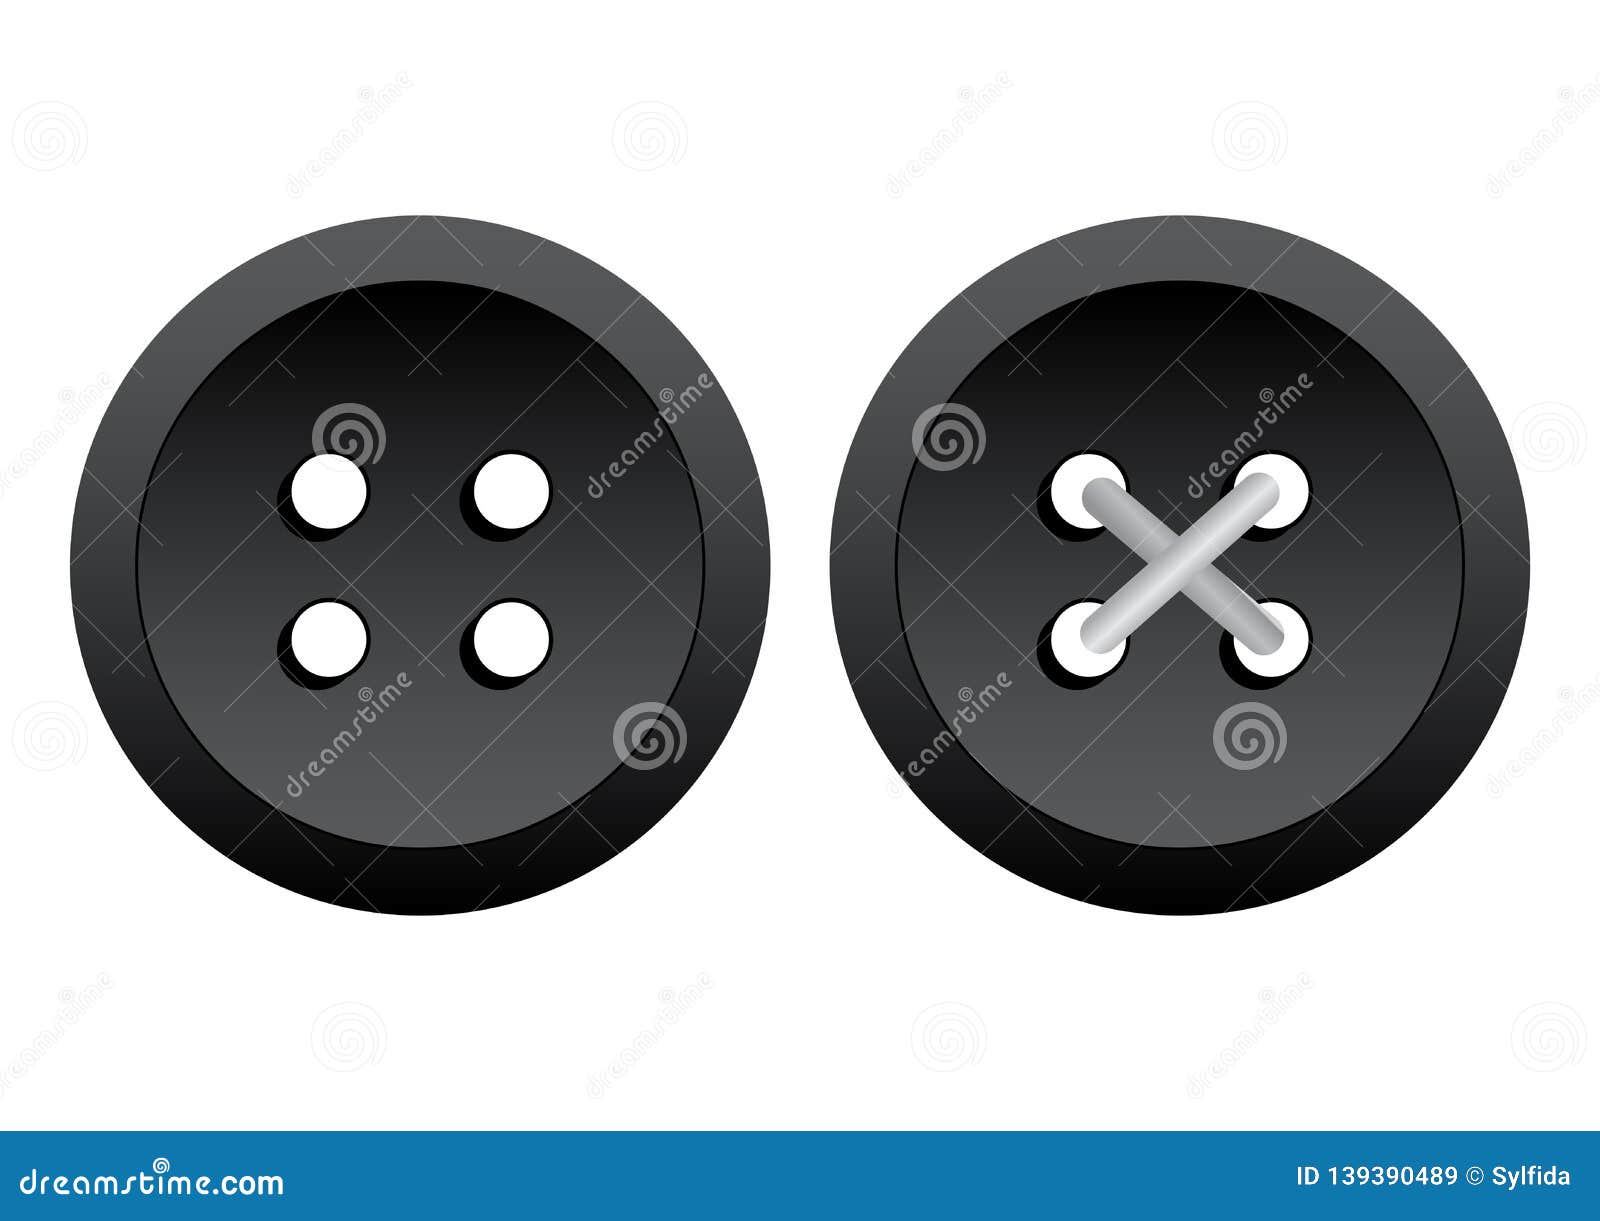 Dos botones negros sobre fondo blanco permanente. Aislada con